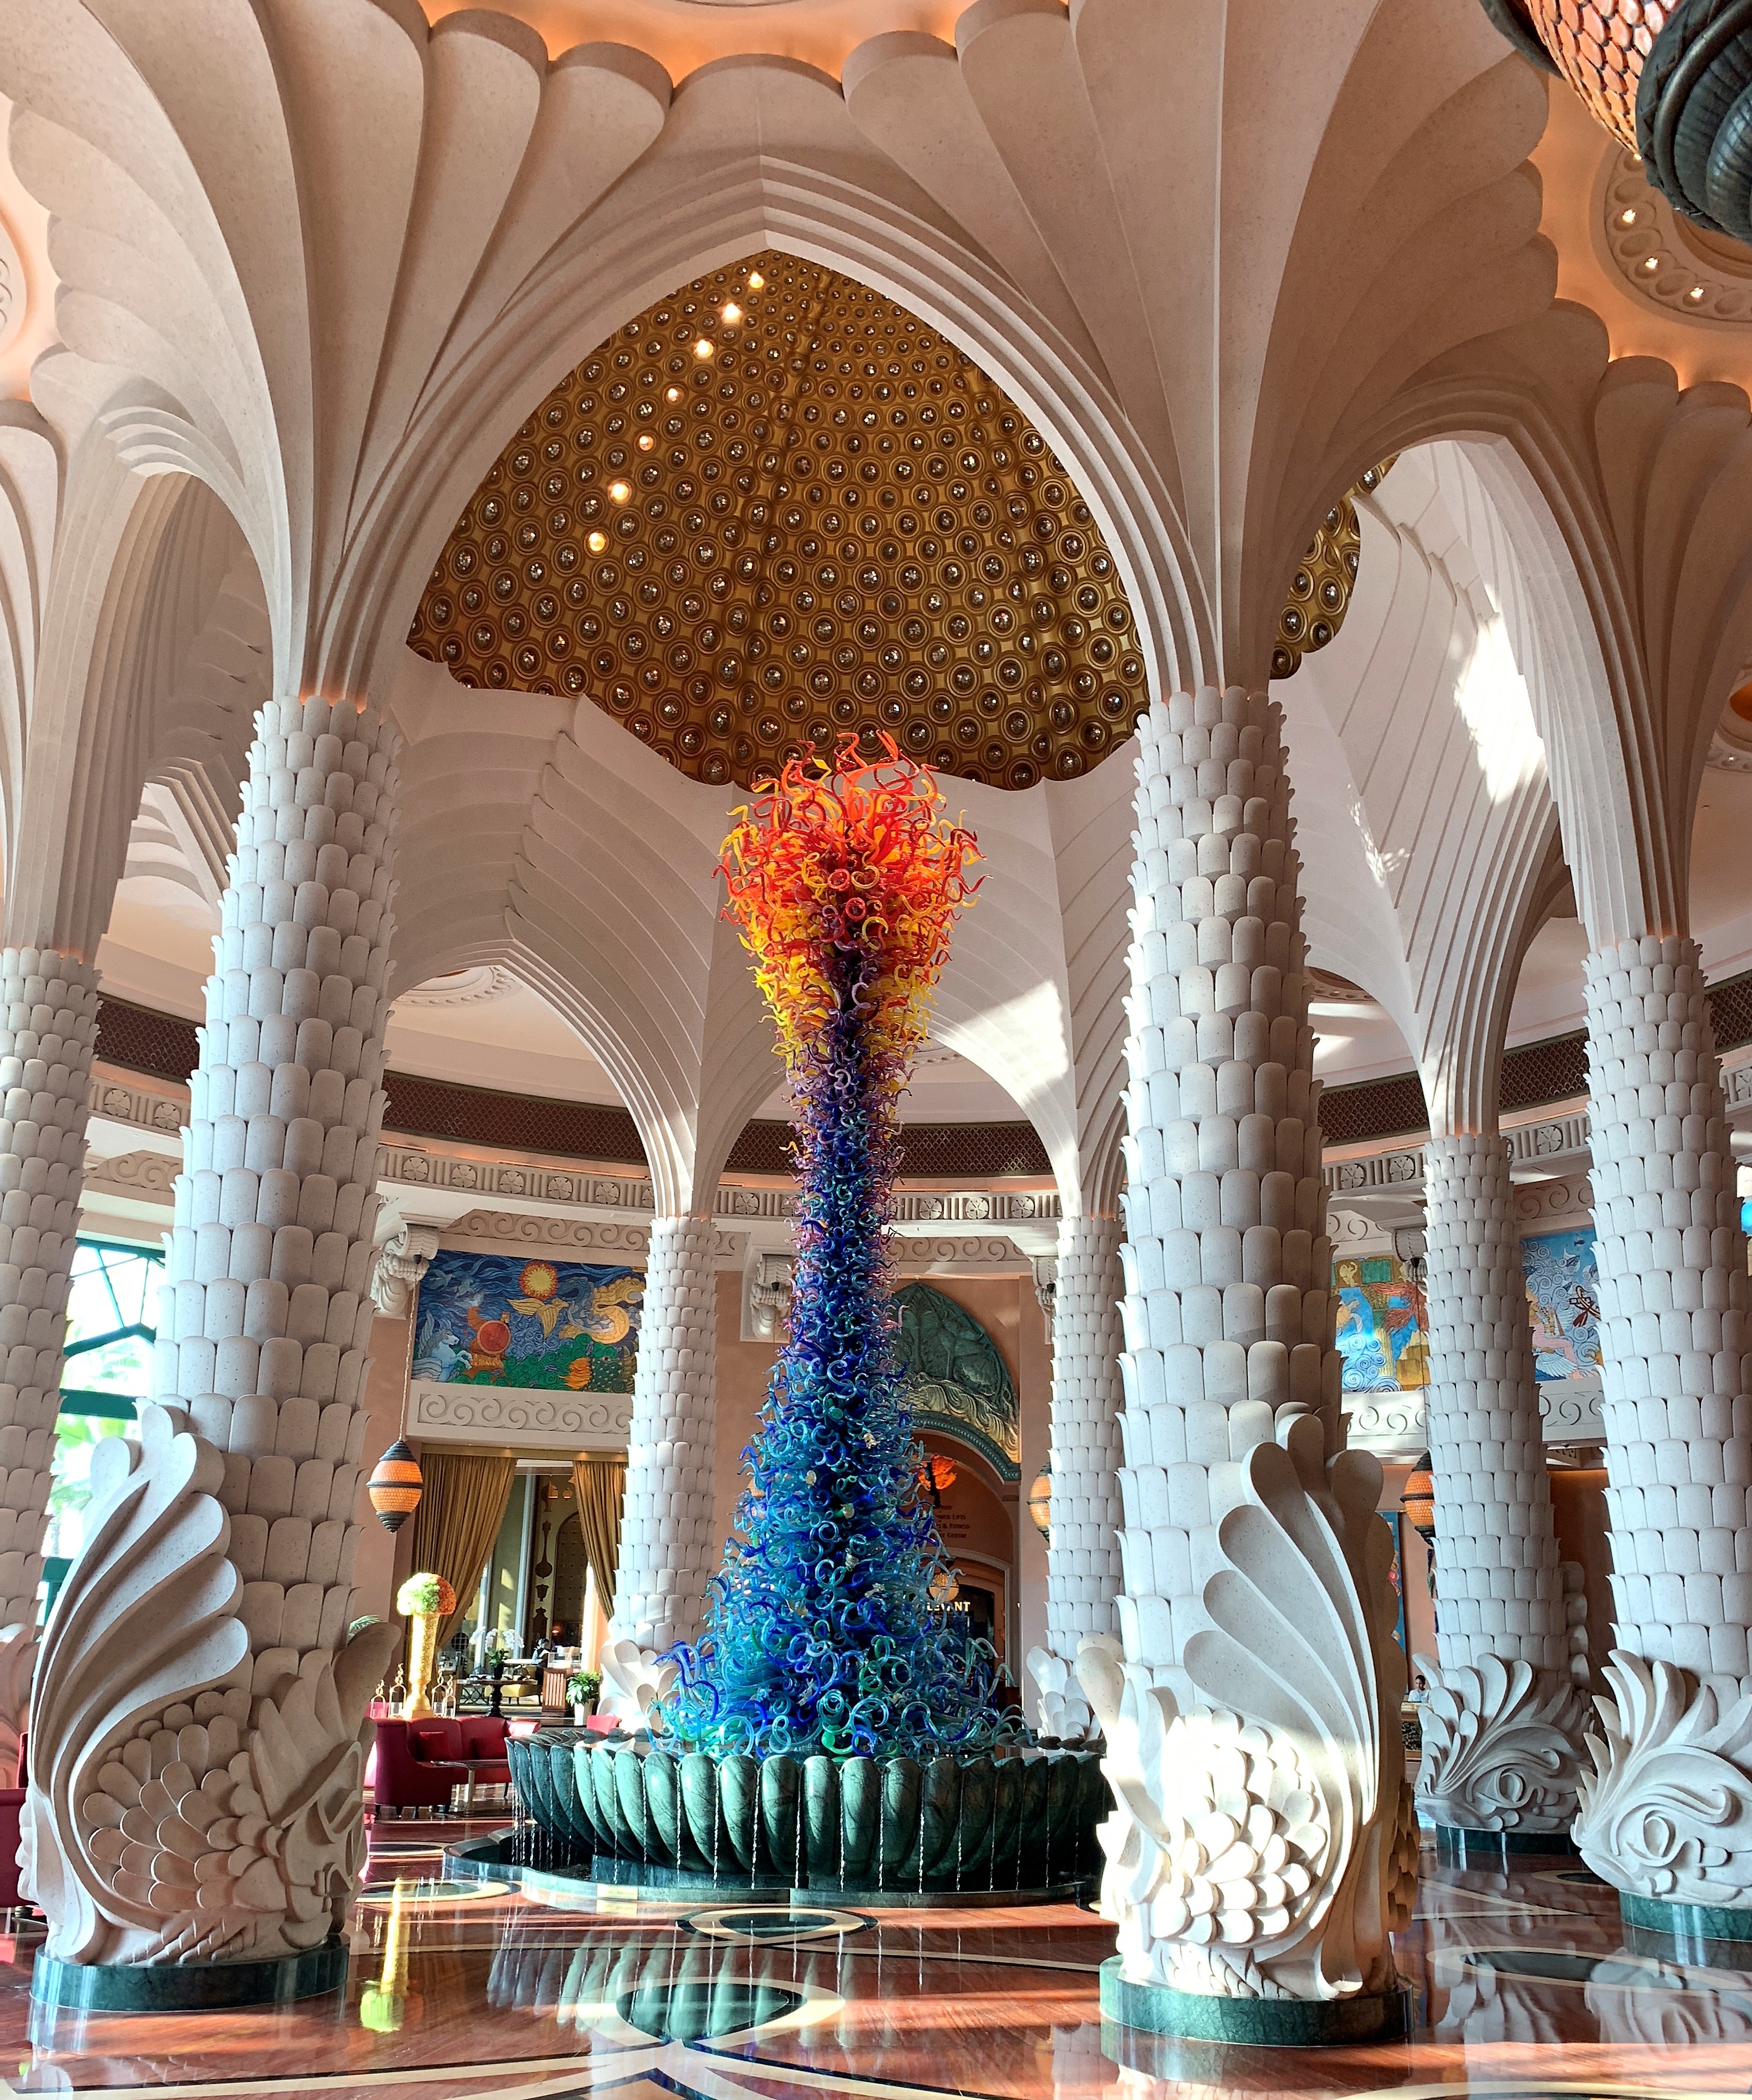 Atlantis The Palm Hotel Dubai Review Turning Left For Less